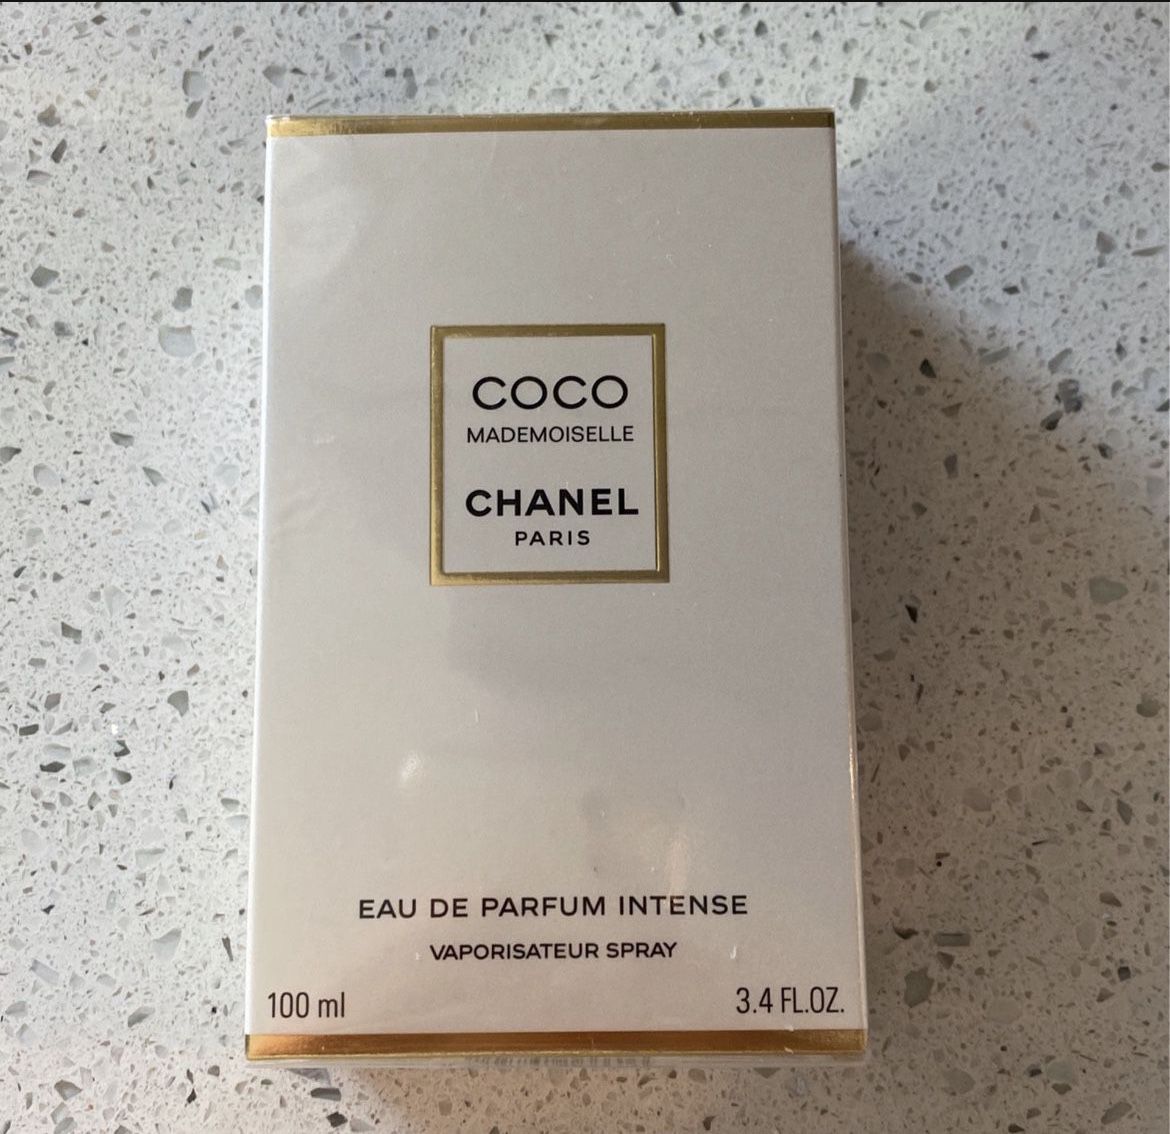 Chanel Coco MADEMOISELLE Eau de Parfum Intense Spray 3.4fl Of for